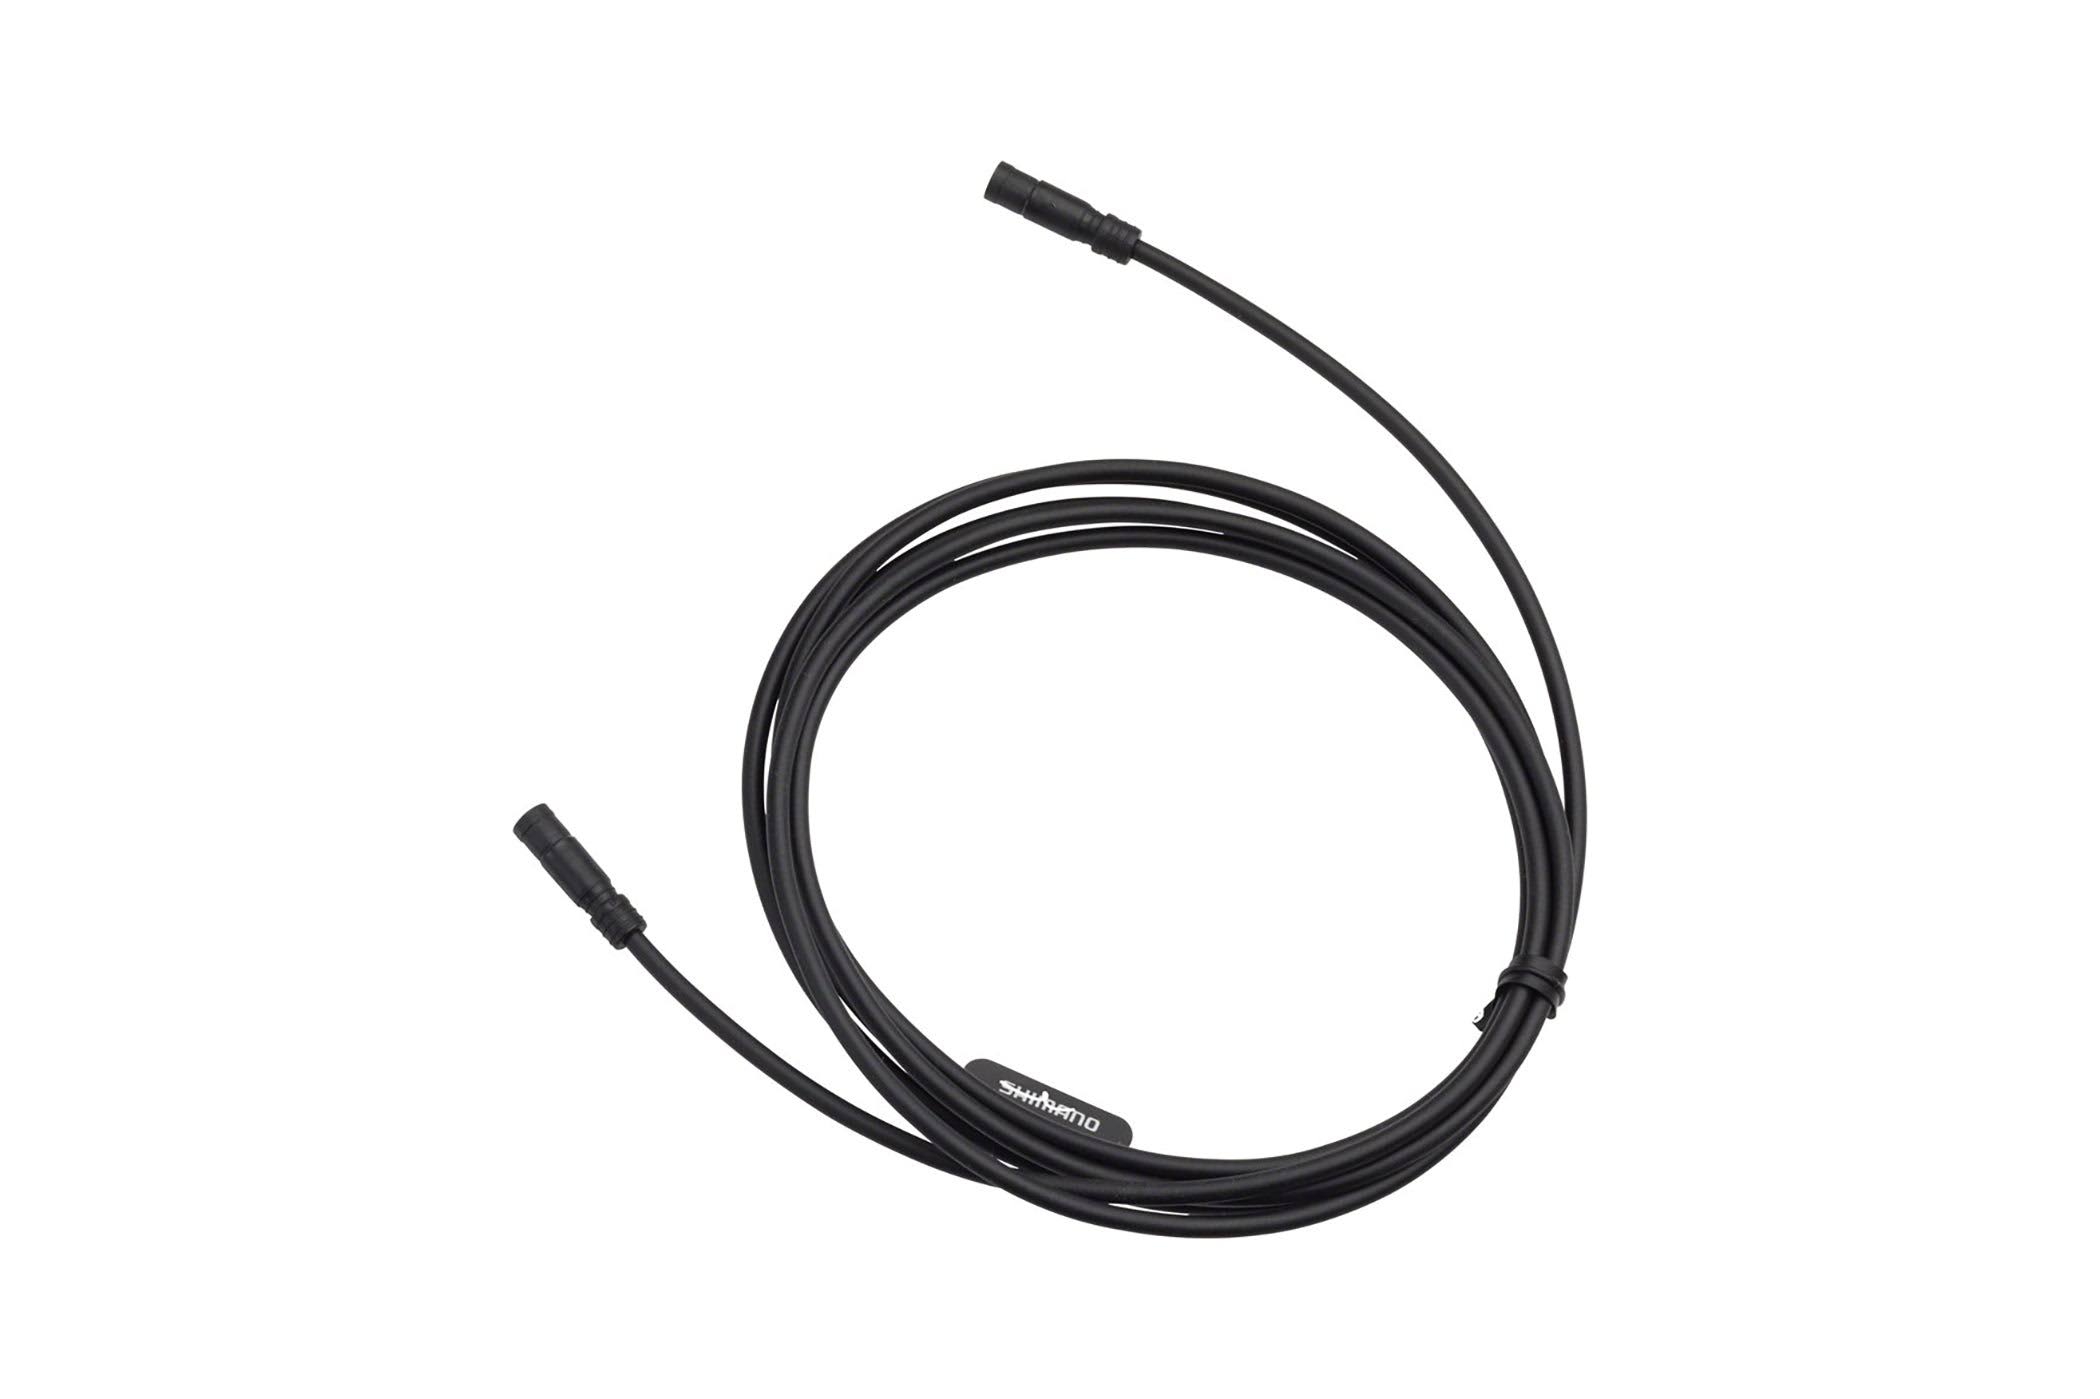 Shimano EWSD50 Di2 Electric Power Cable - Black, 1600mm